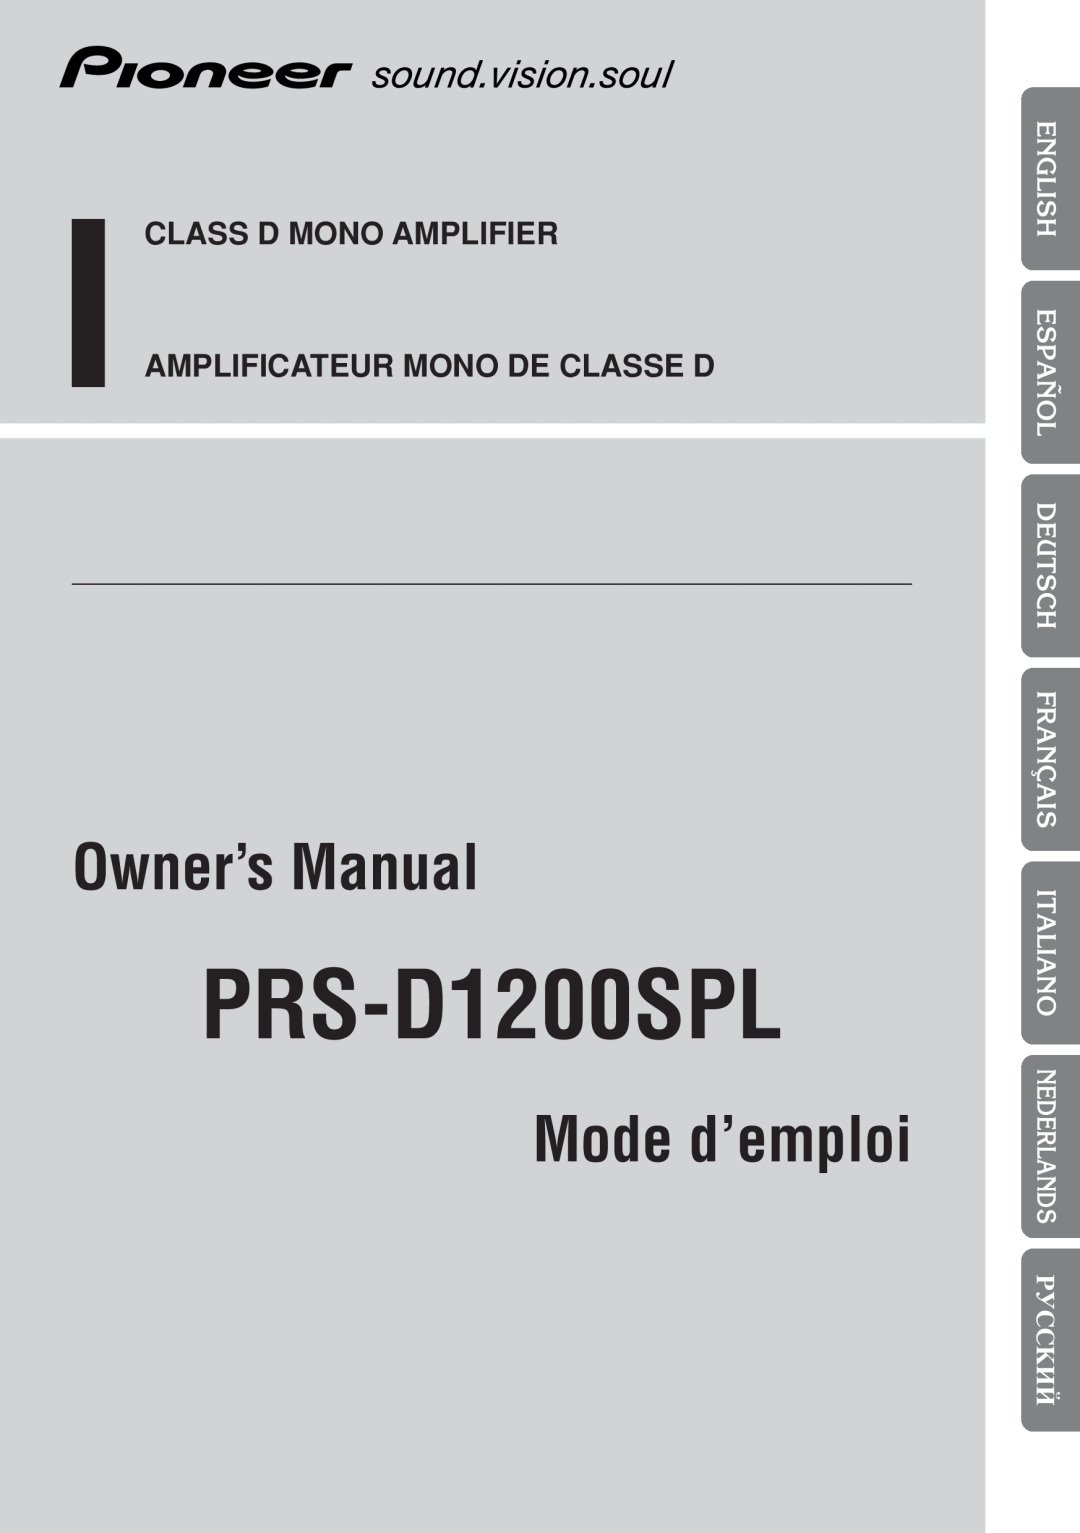 Pioneer owner manual êìëëäàâ, PRS-D1200SPL, Owner’s Manual, Mode d’emploi, Class D Mono Amplifier 